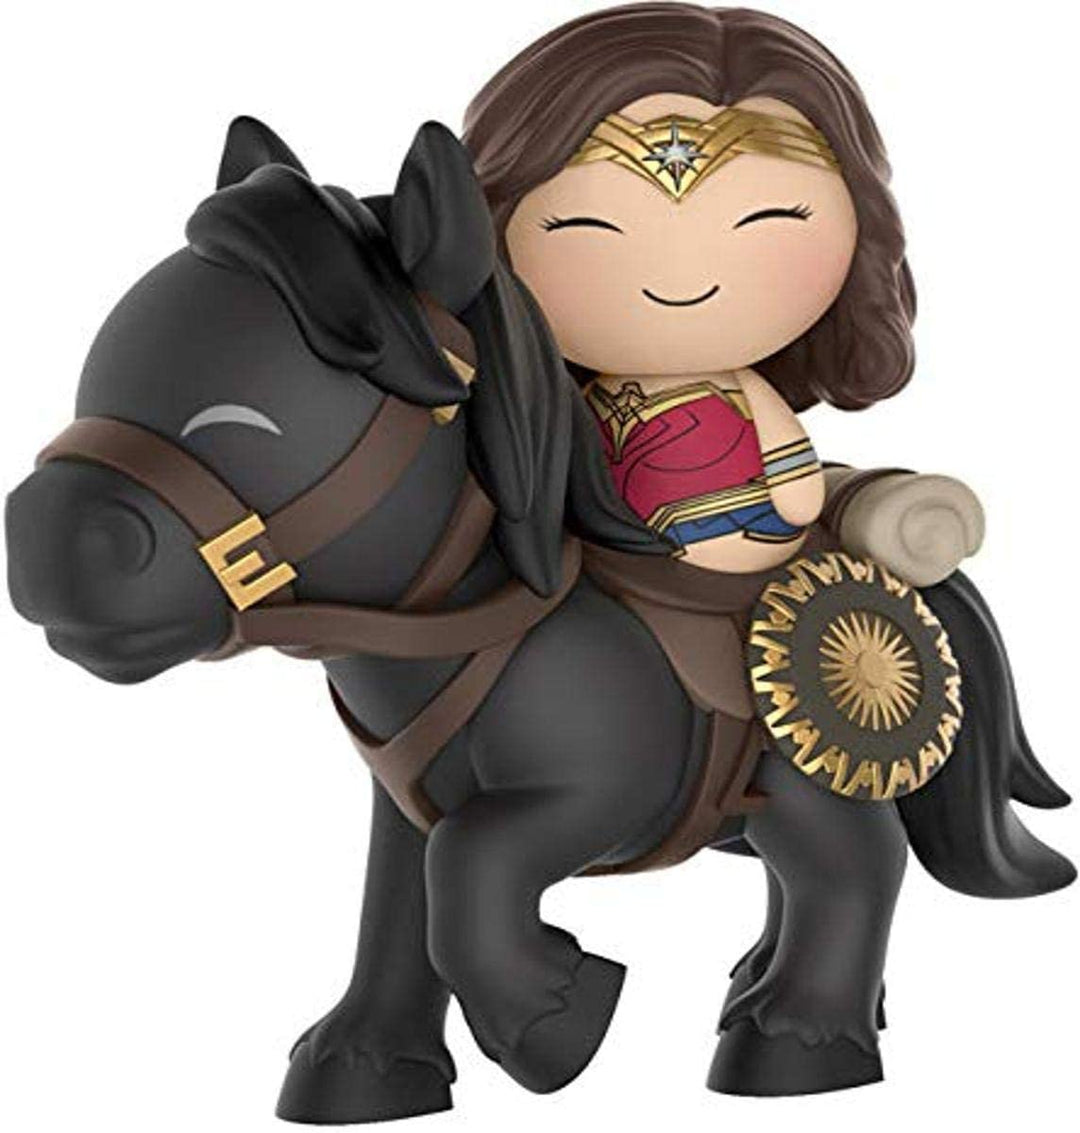 Dorbz Ridez Wonder Woman with Horse Funko 25156 Vinilo coleccionable